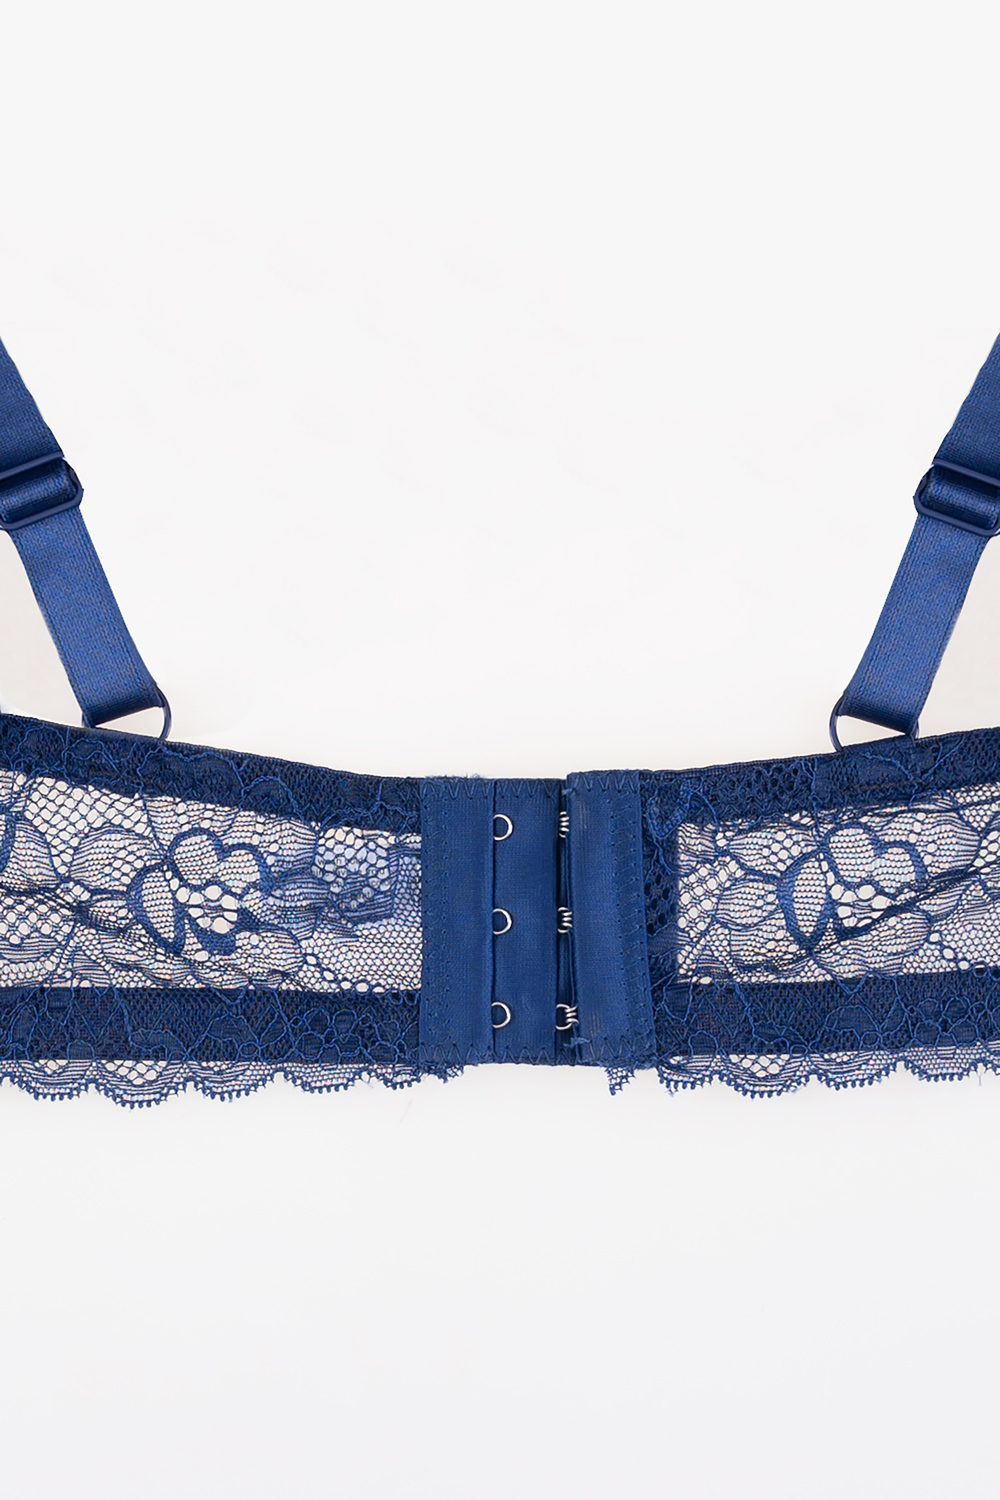 Lingeries Bras for Women Plus Size 7XL Sleep Lace Back Comfort Bra (Bands  Size : 6X-Large, Color : Navy Blue)